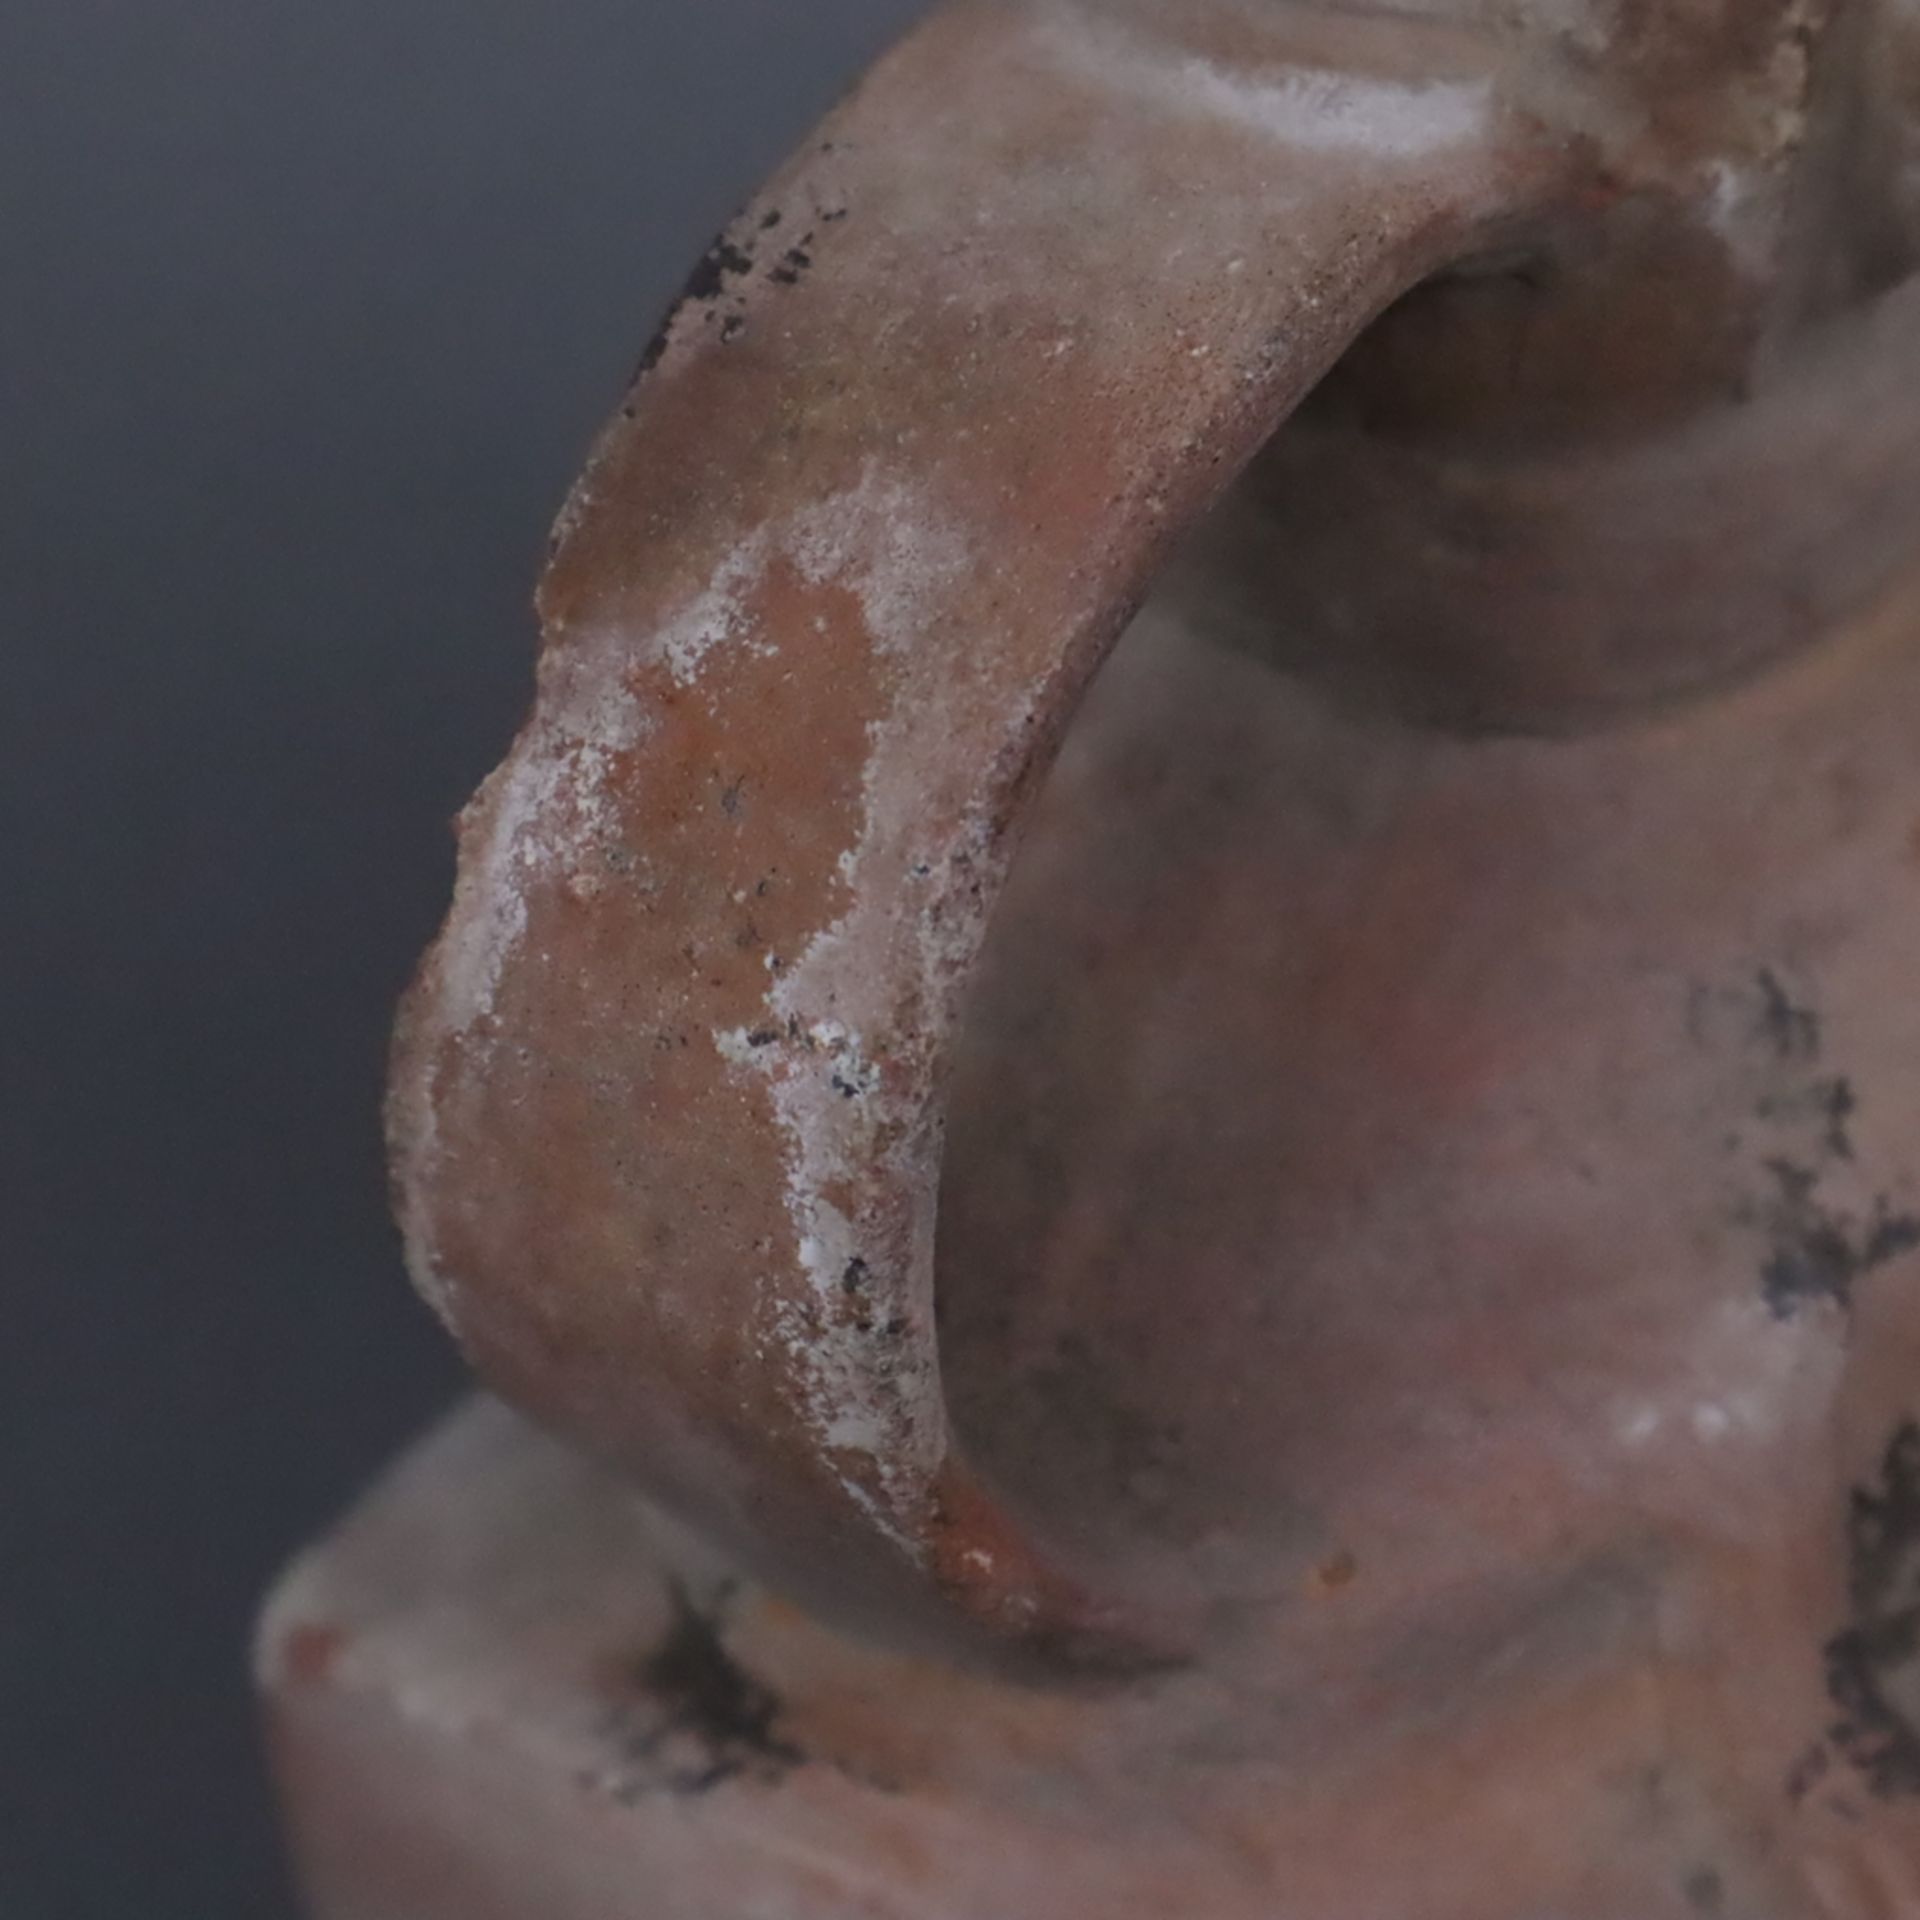 Zoomorphes Tongefäß - Südamerika, wohl Nordperu, rötlicher Ton, Tierfigur auf quaderförmigem Sockel - Bild 6 aus 6